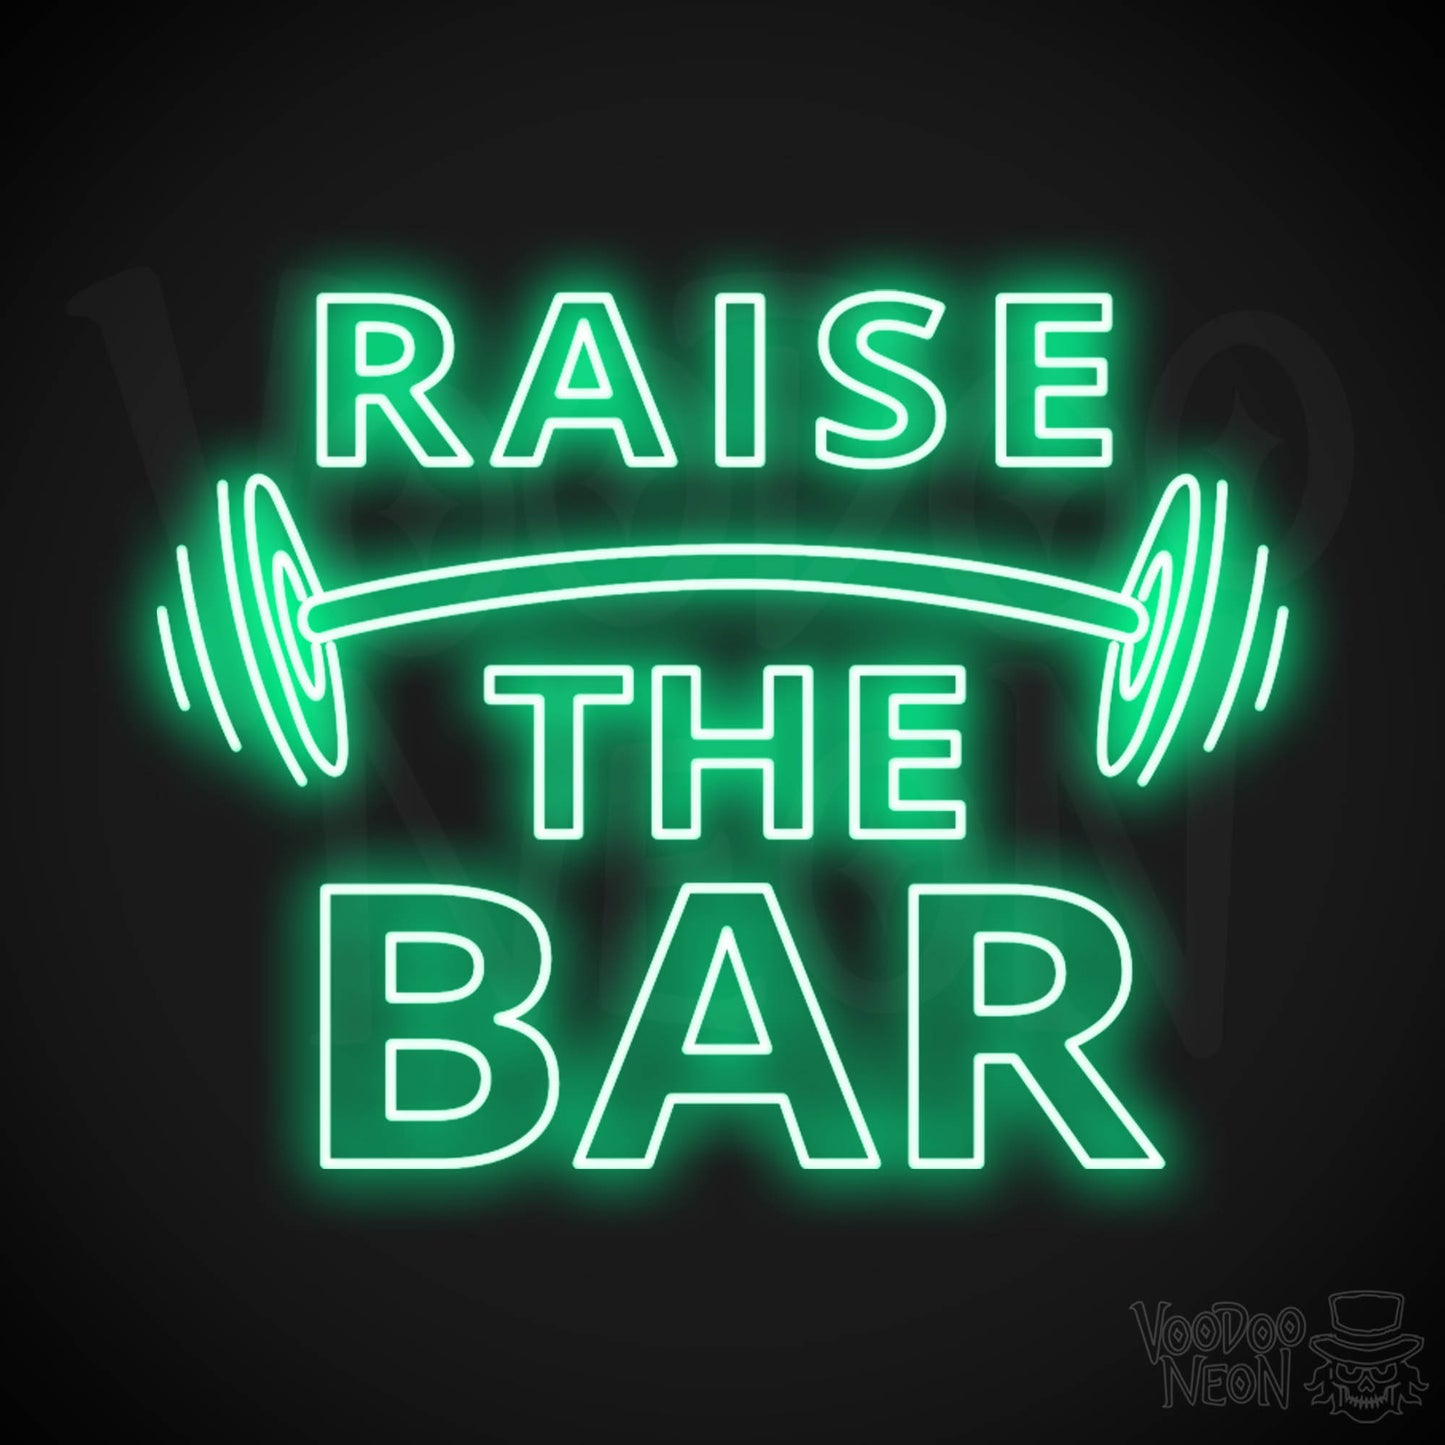 Raise The Bar LED Neon - Green